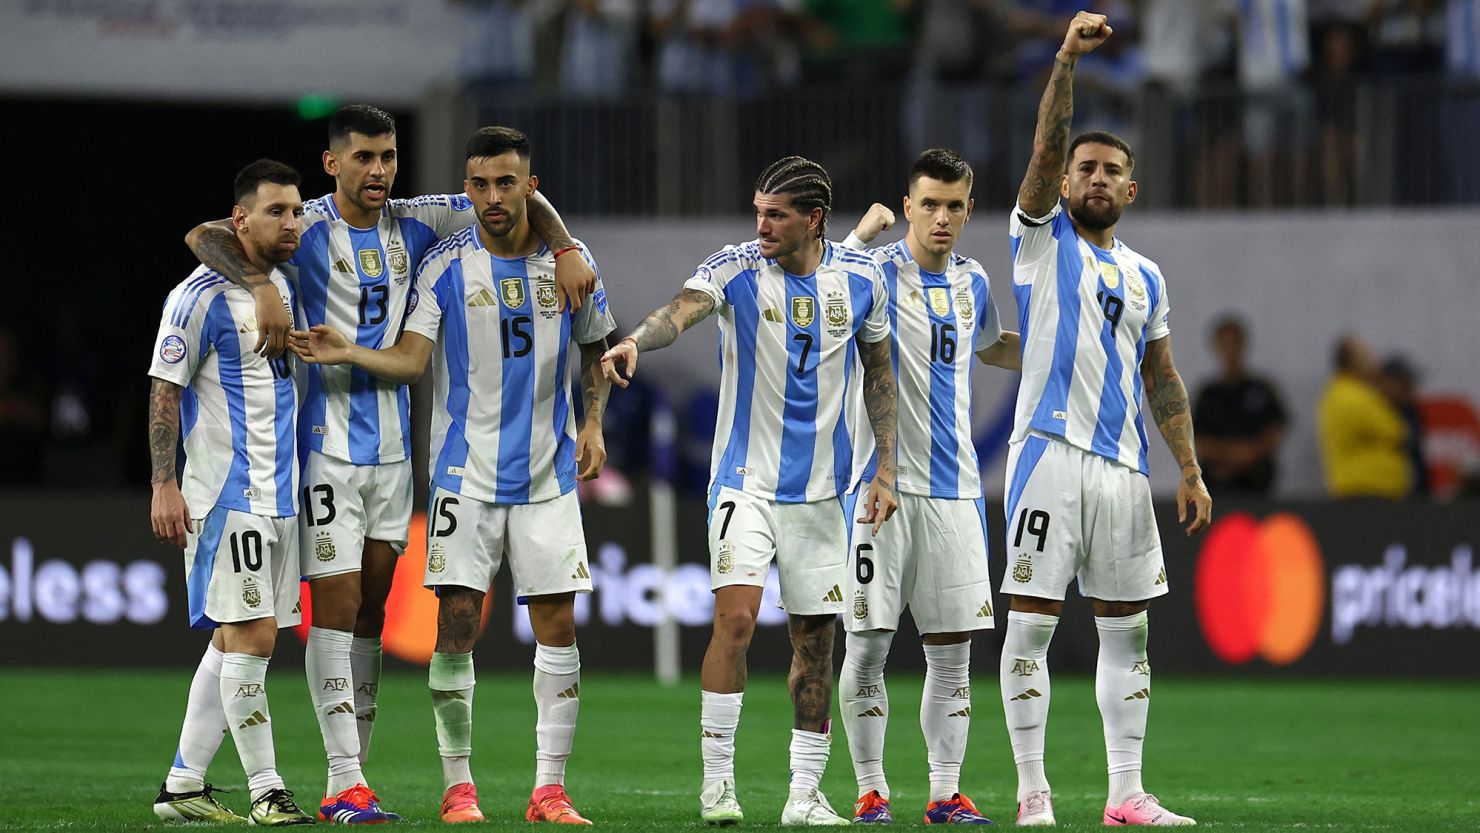 Argentina beat Ecuador on penalties to reach the semifinals.